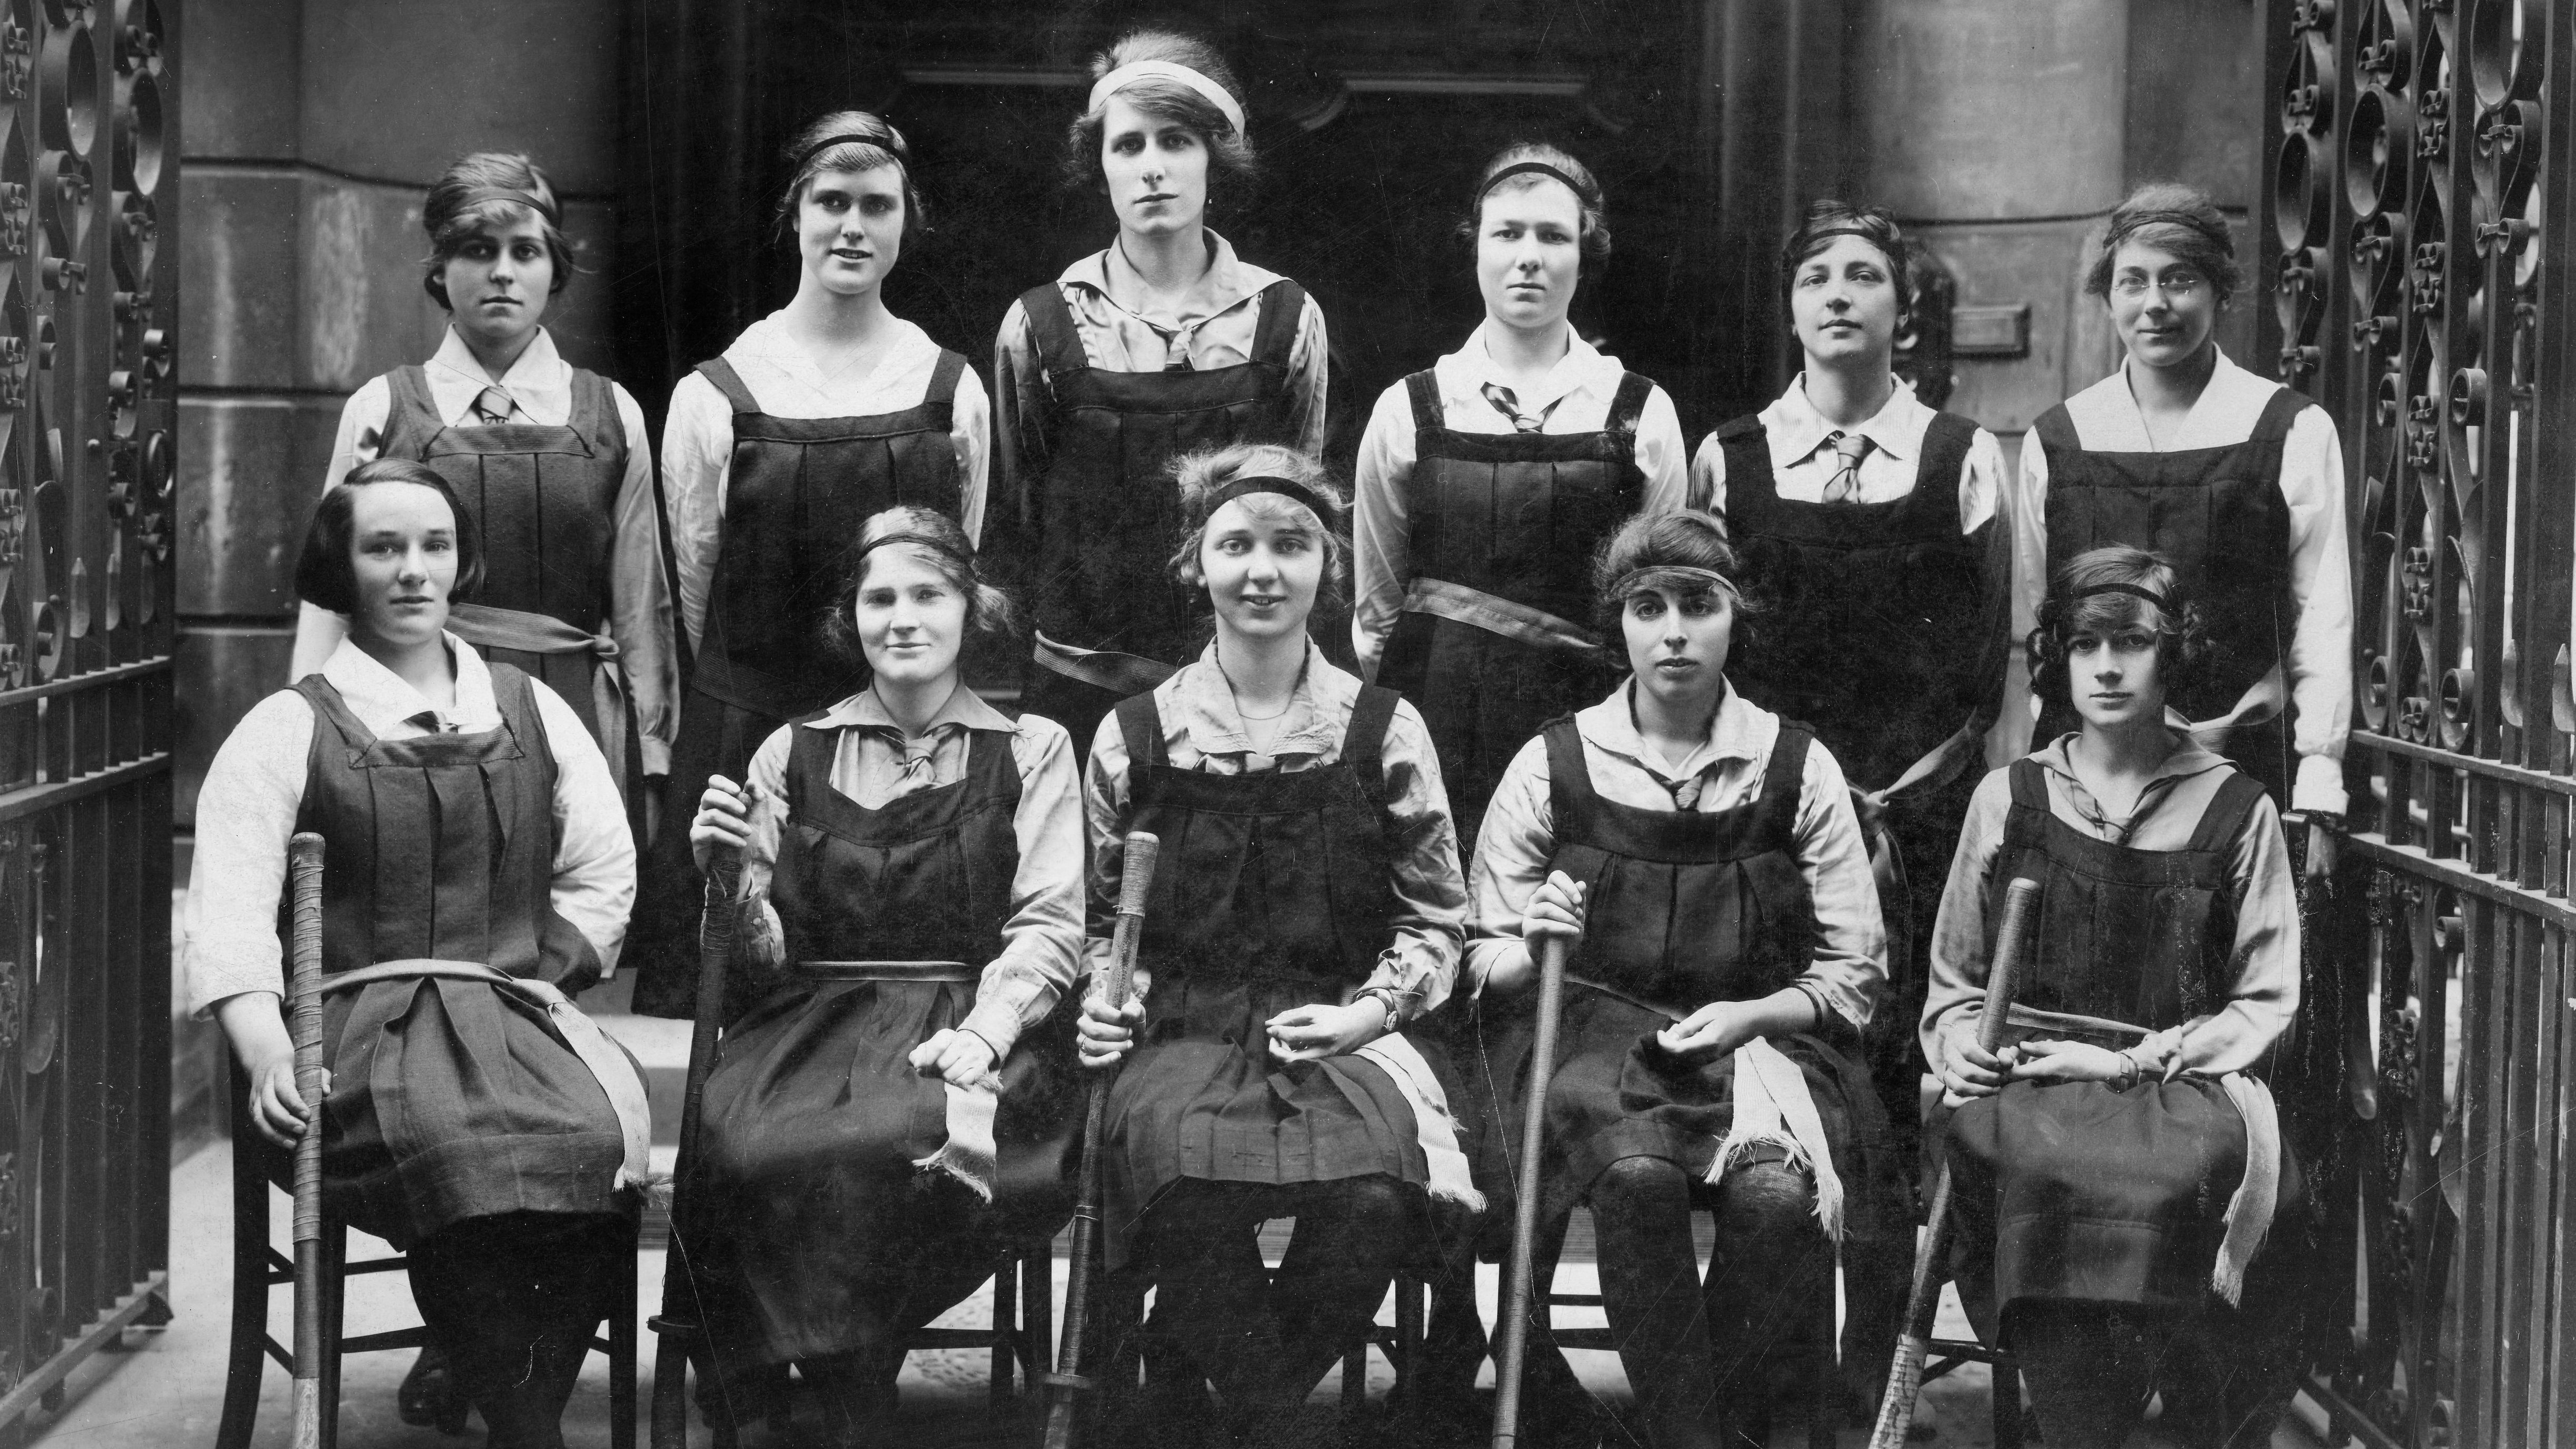 LSE Women's Hockey team 1920-21